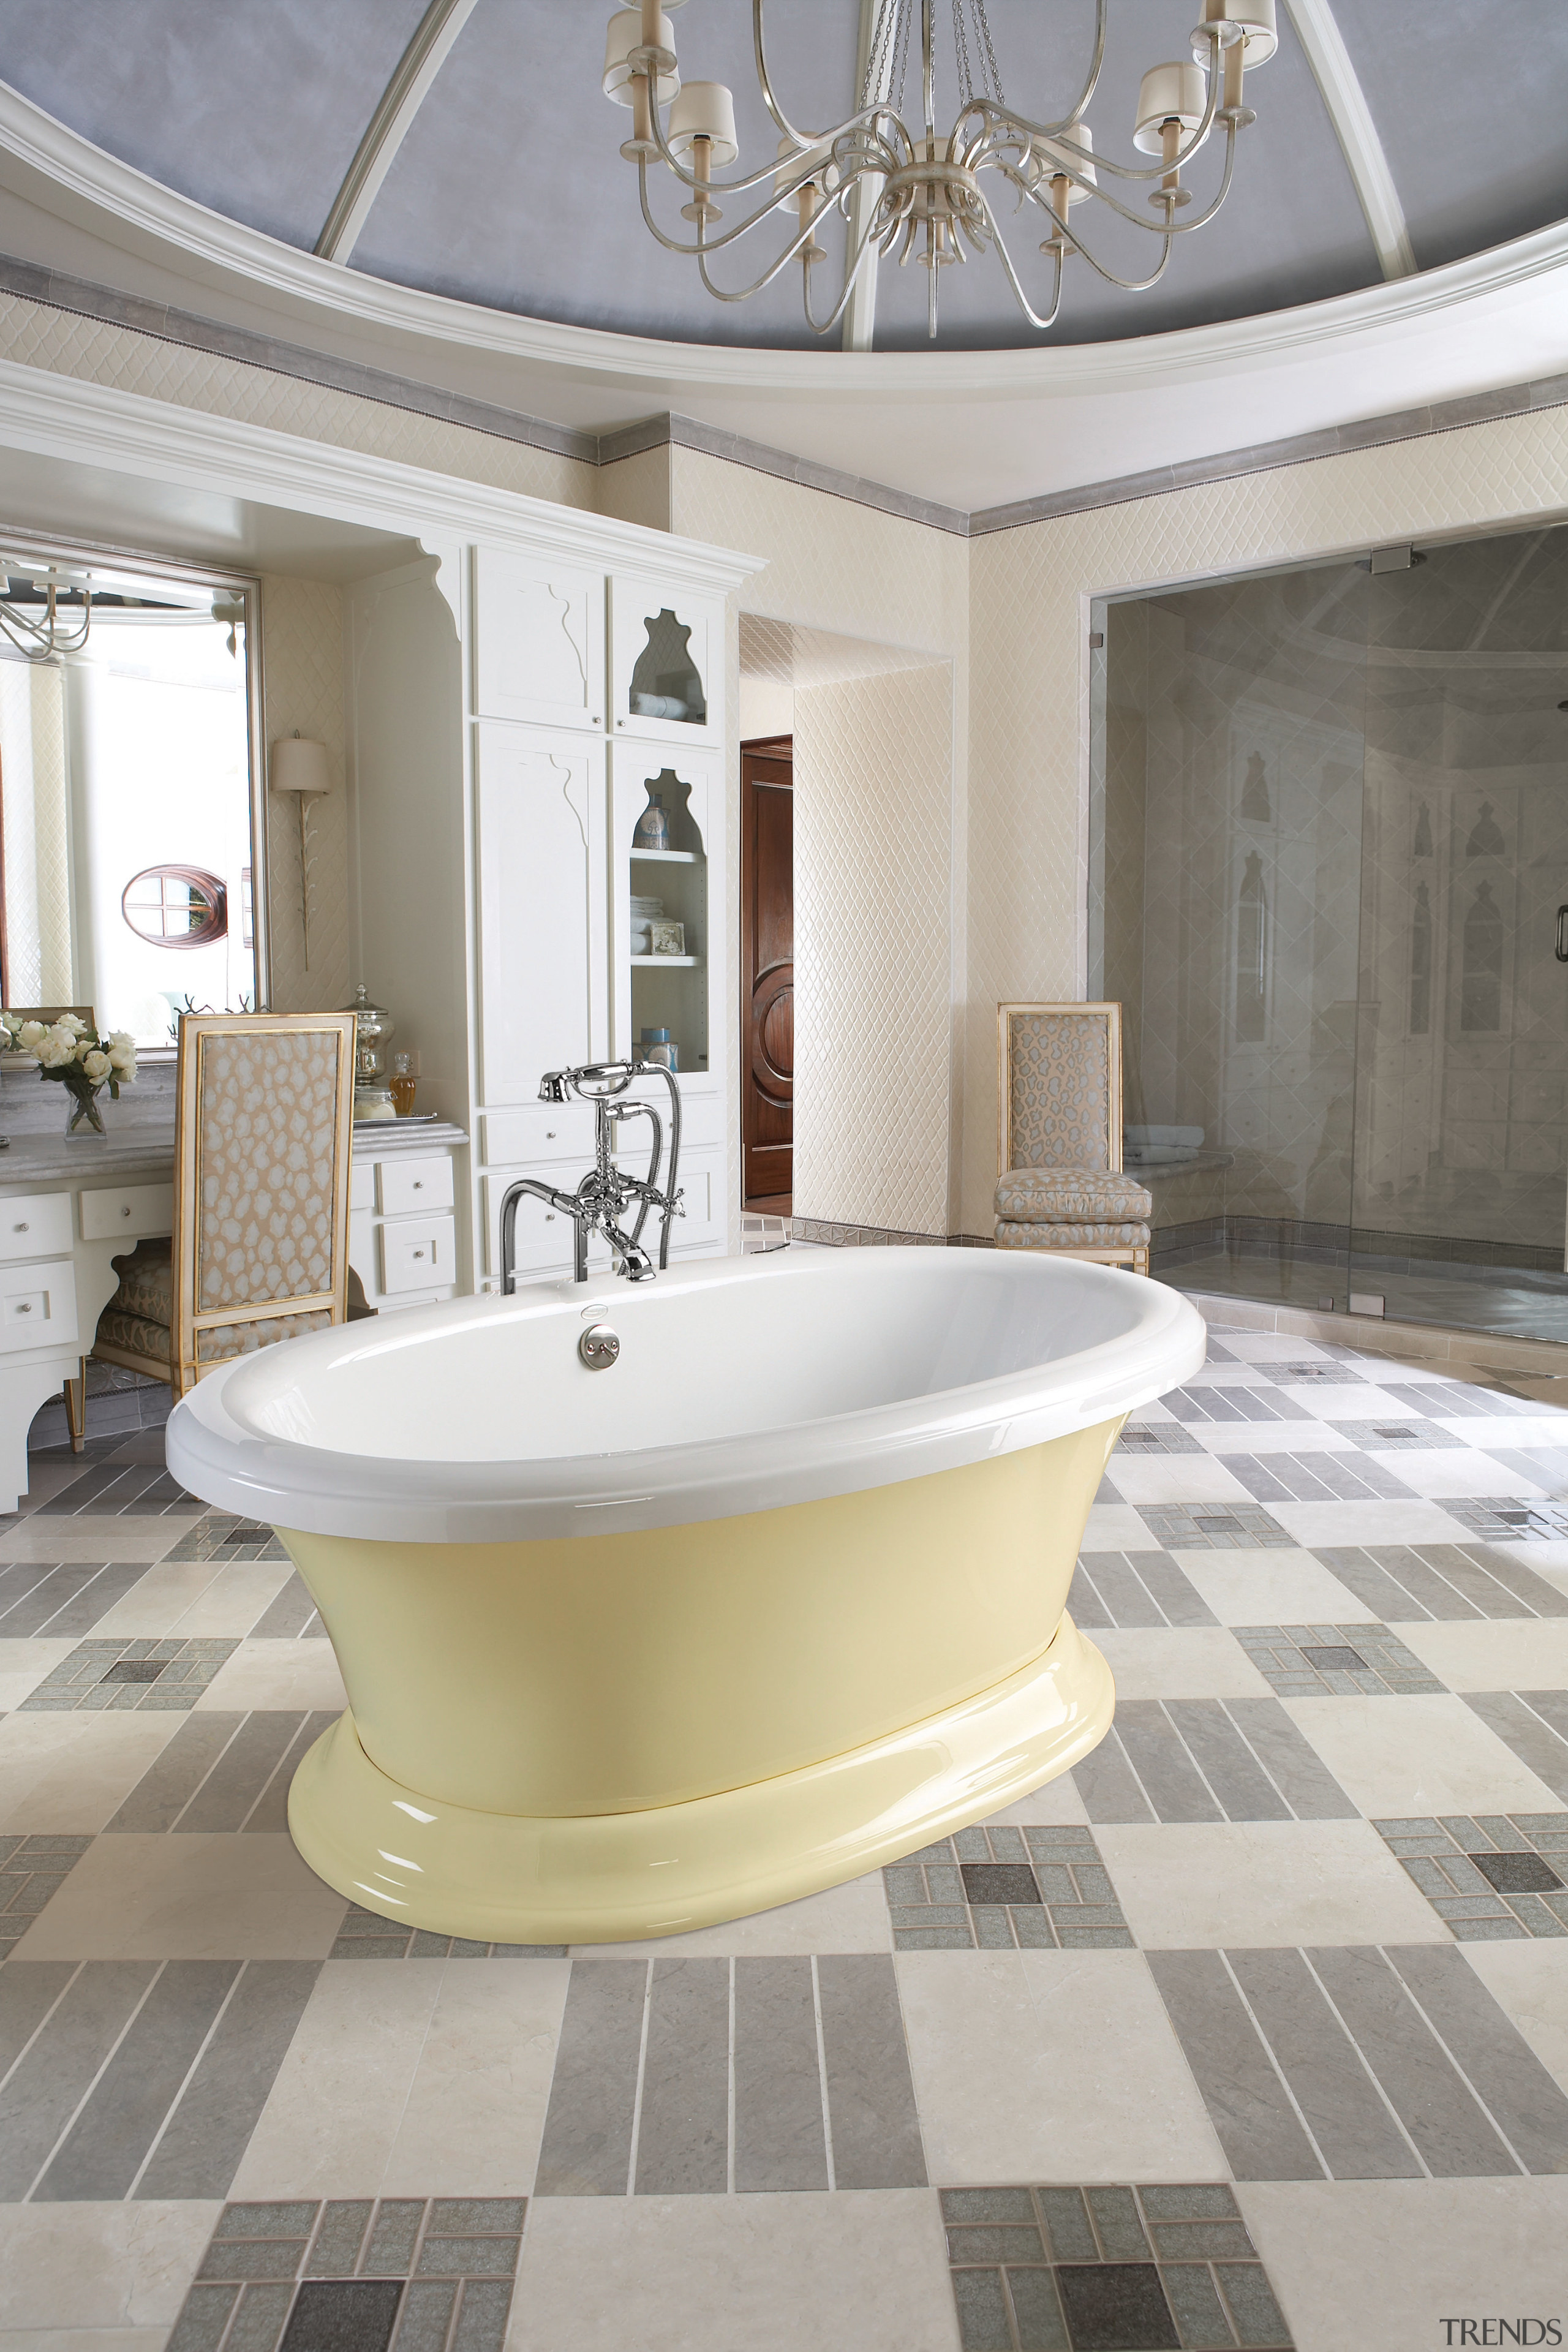 Image of bath tubs created by Aquatic Baths bathroom, ceramic, estate, floor, flooring, home, interior design, plumbing fixture, room, tap, tile, toilet seat, gray